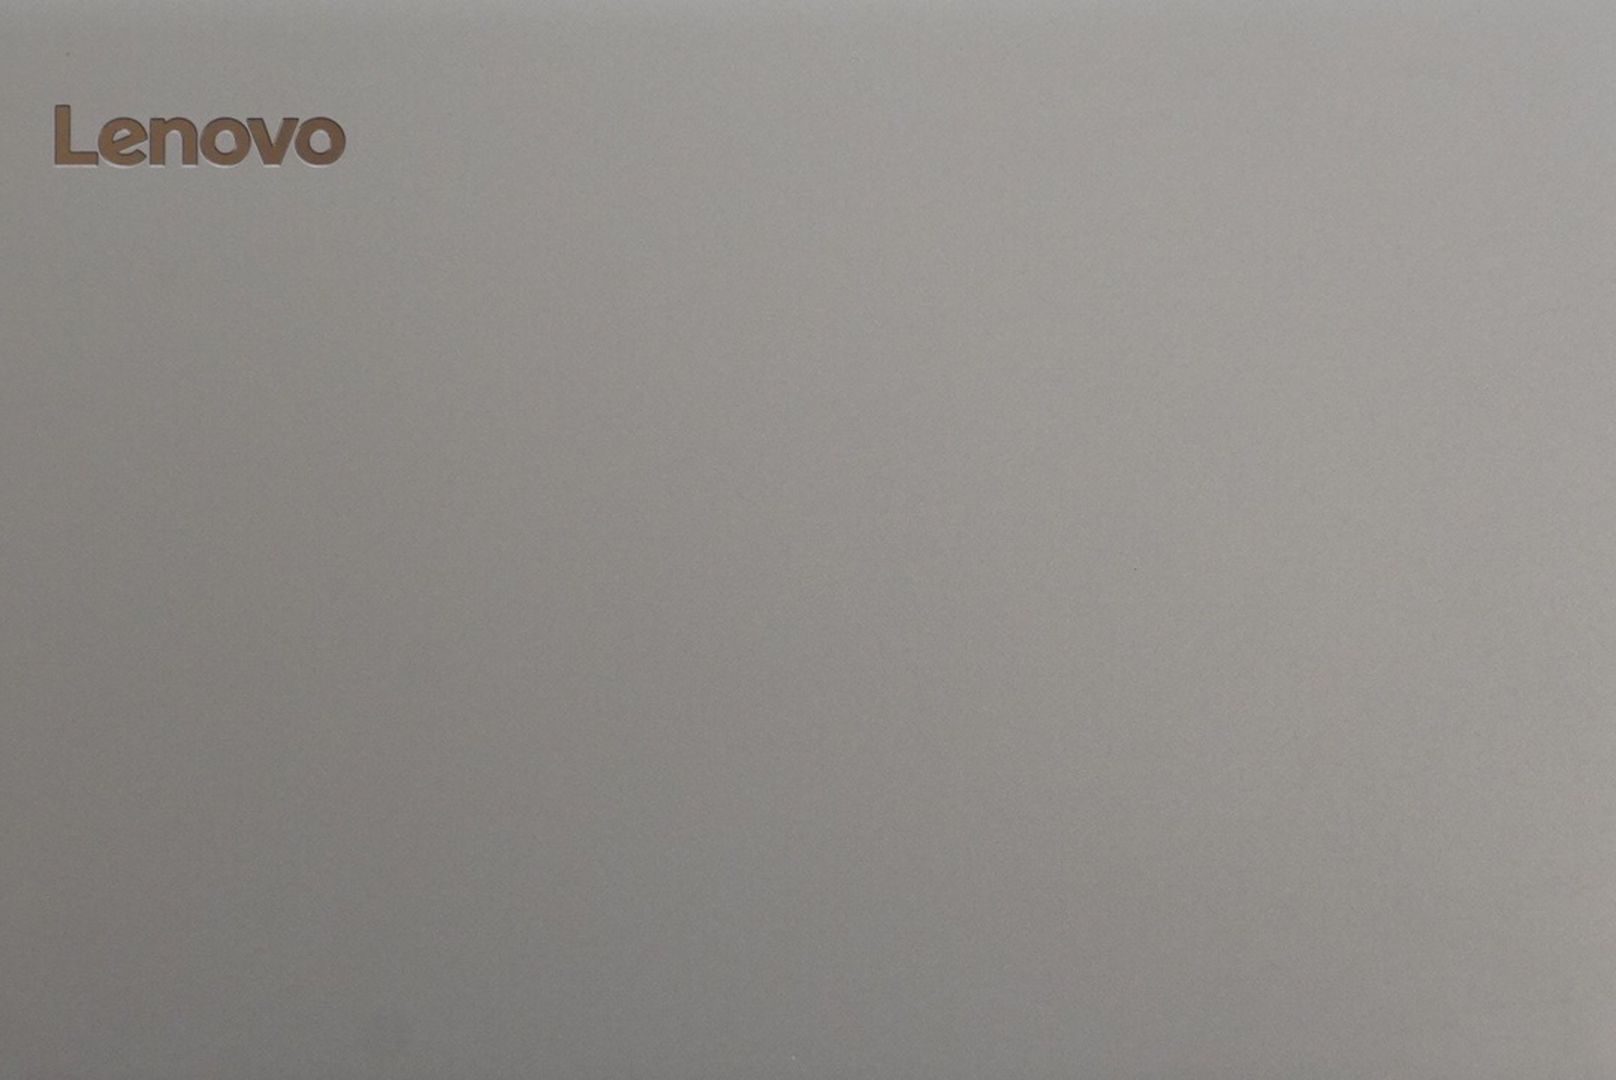 Lenovo Ideapad 330 -15.6in Laptop